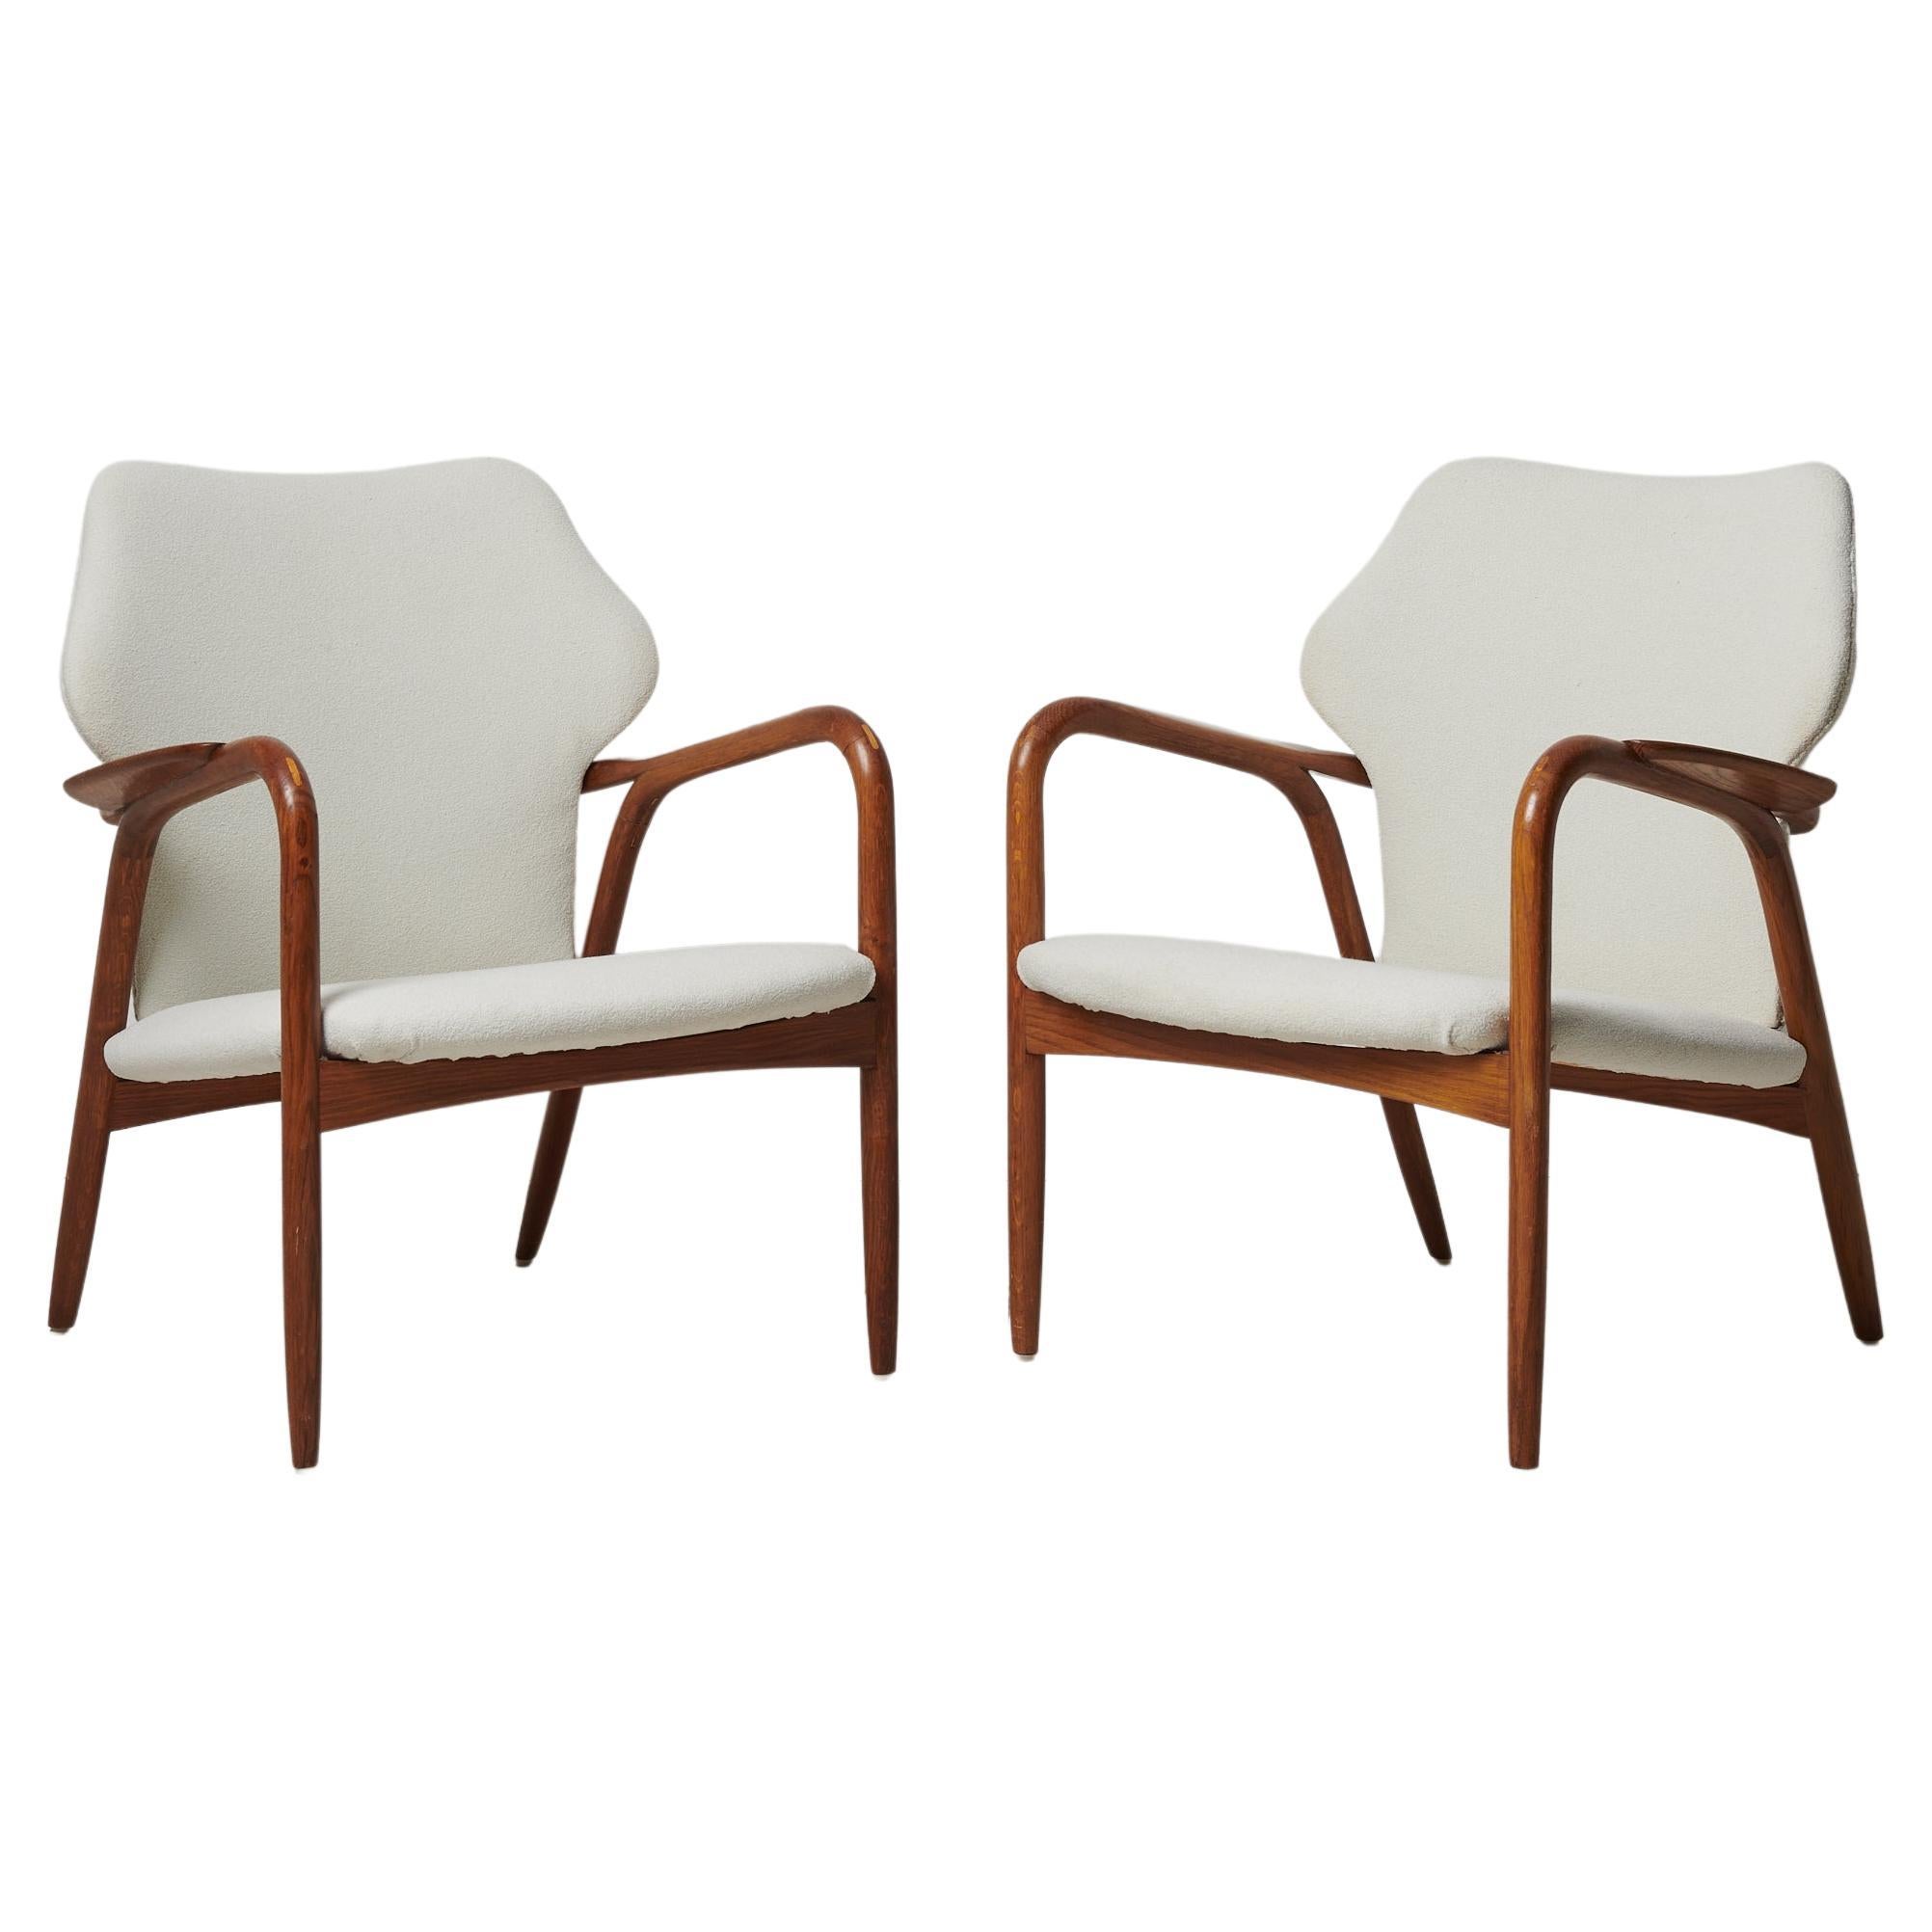 Pair of Swedish Modern Upholstered White Armchairs